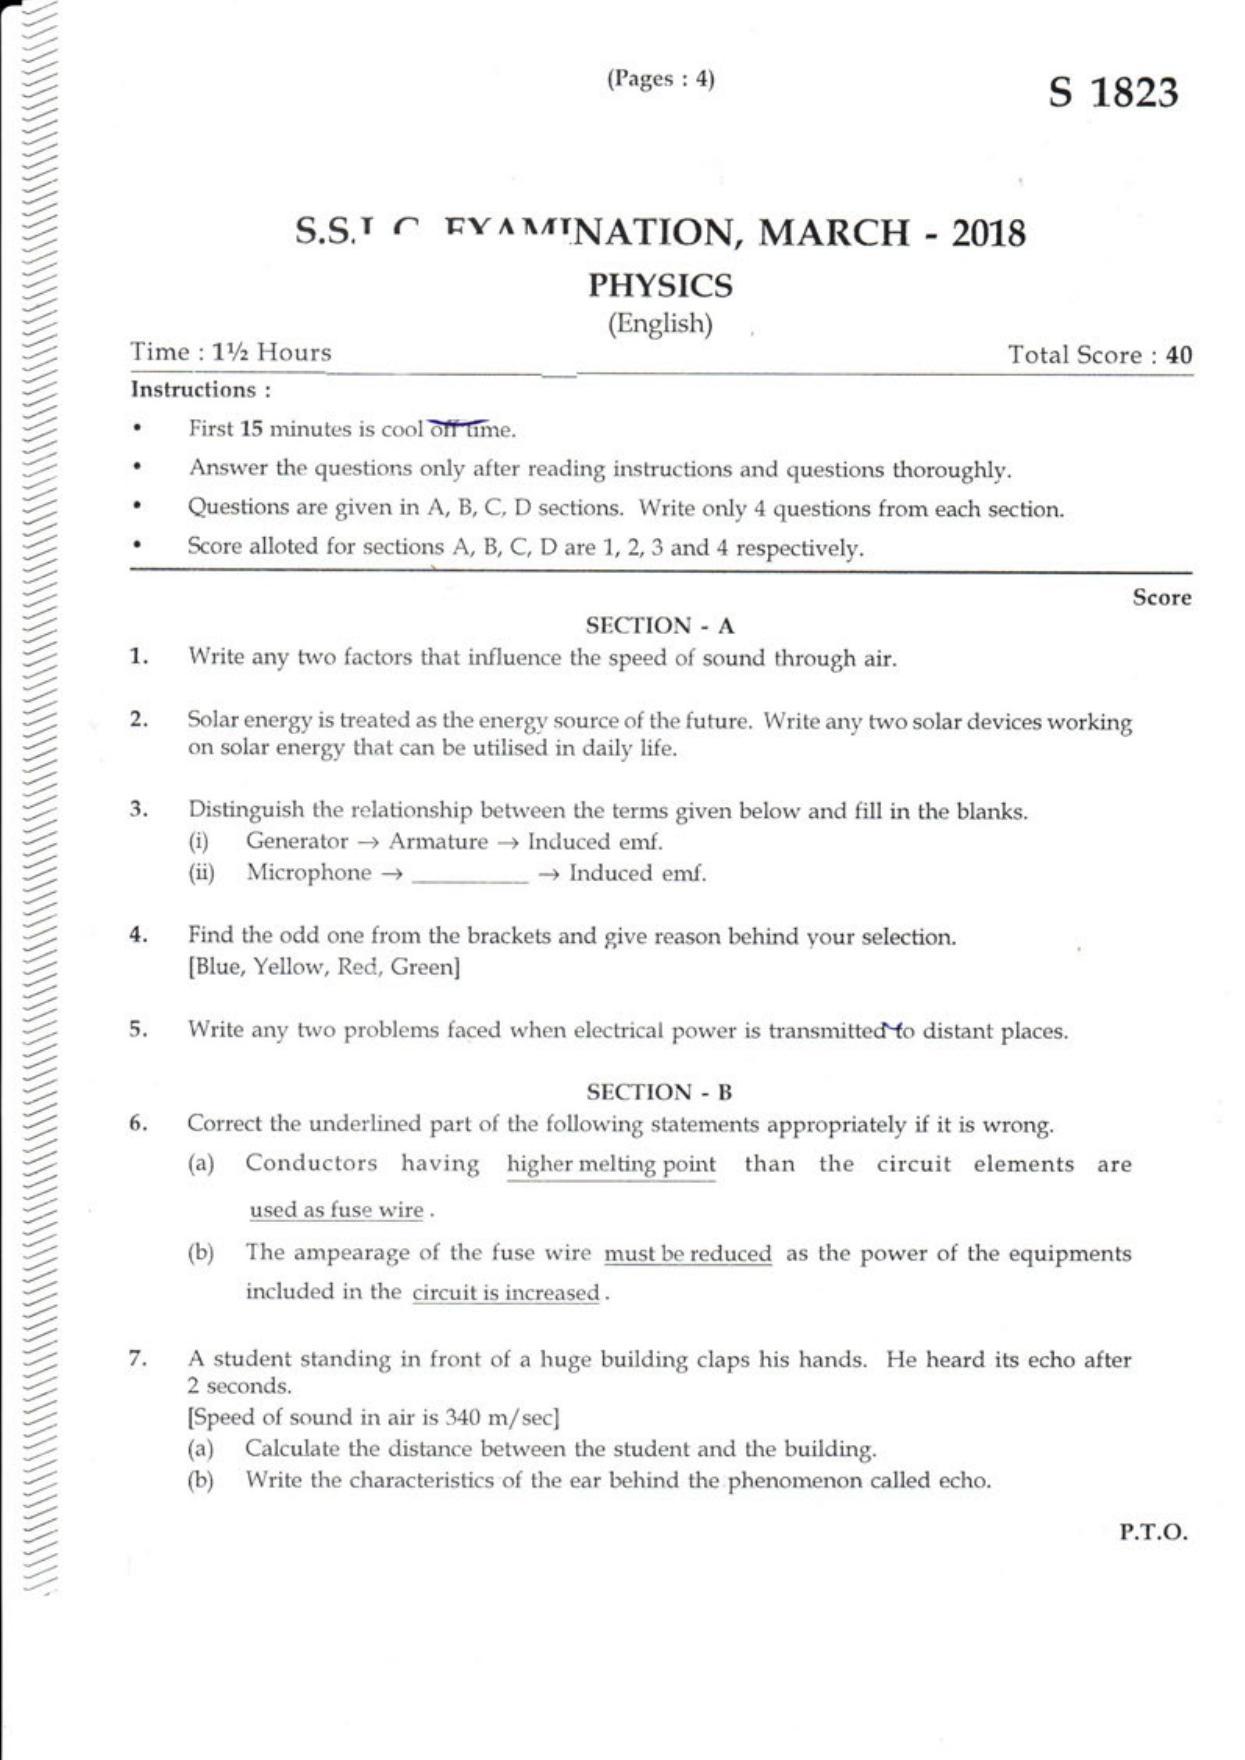 Kerala SSLC 2018 Physics (EM) Question Paper - Page 1